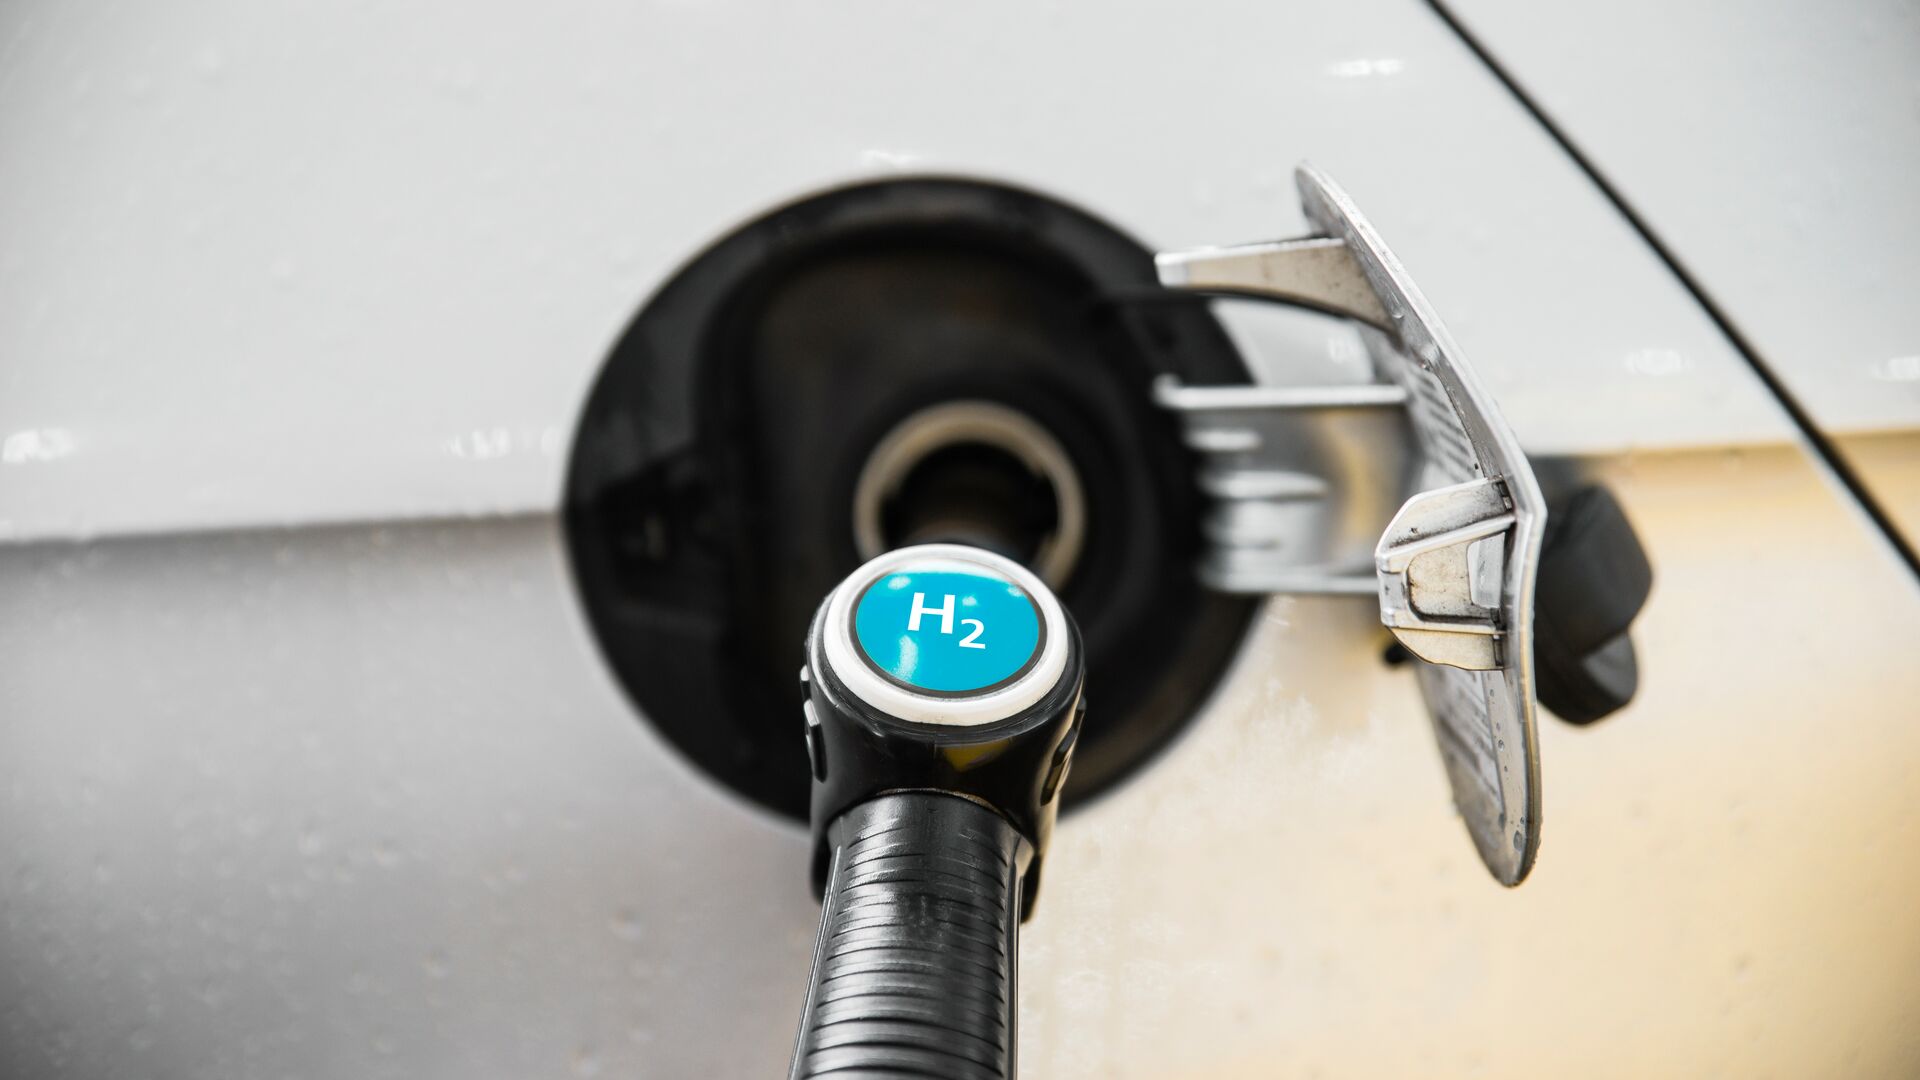 Refueling a hydrogen-fueled car